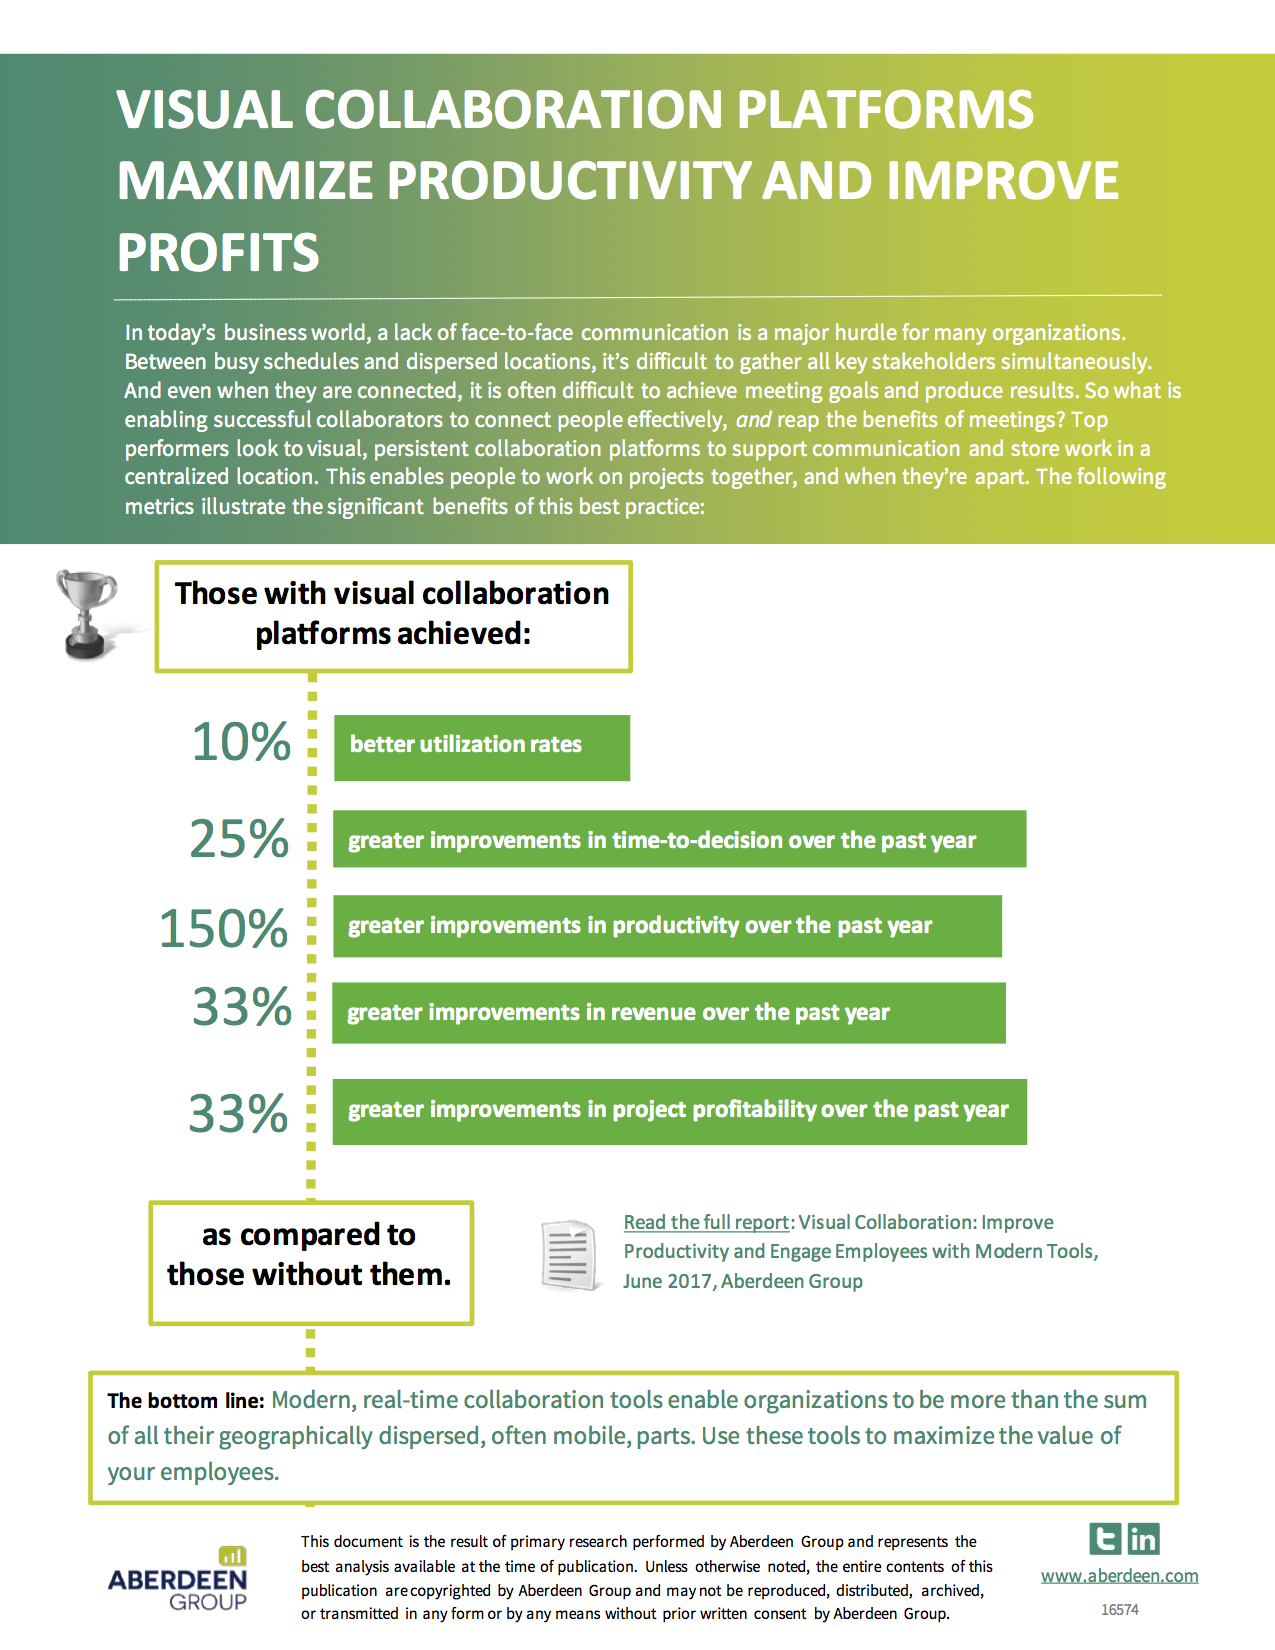 Visual Collaboration Platforms Maximize Productivity and Improve Profits - Bluescape.png